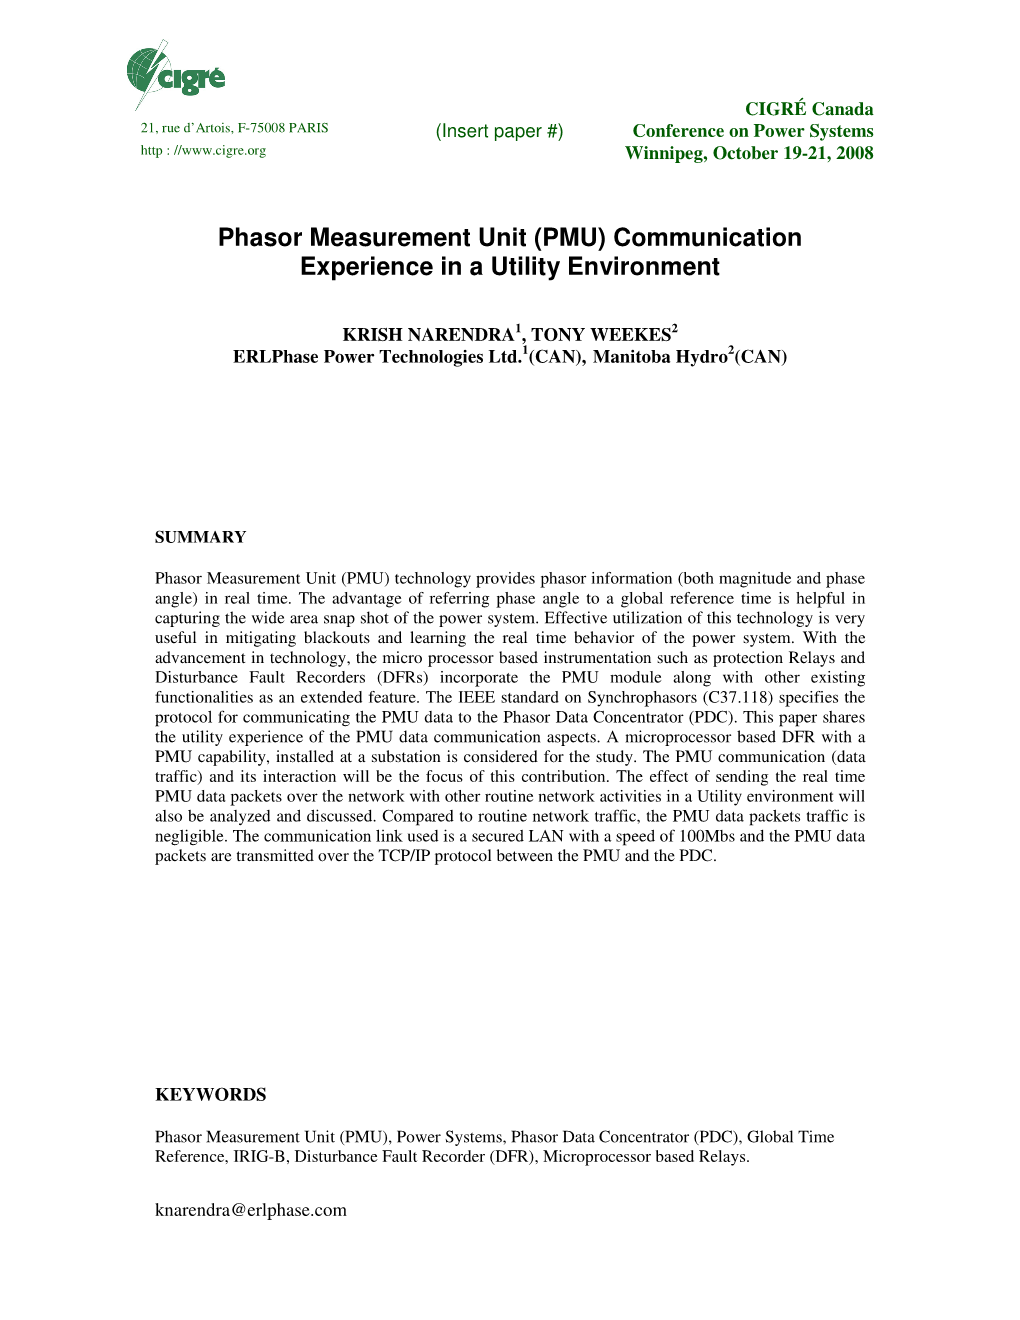 Phasor Measurement Unit (PMU) Communication Experience in a Utility Environment